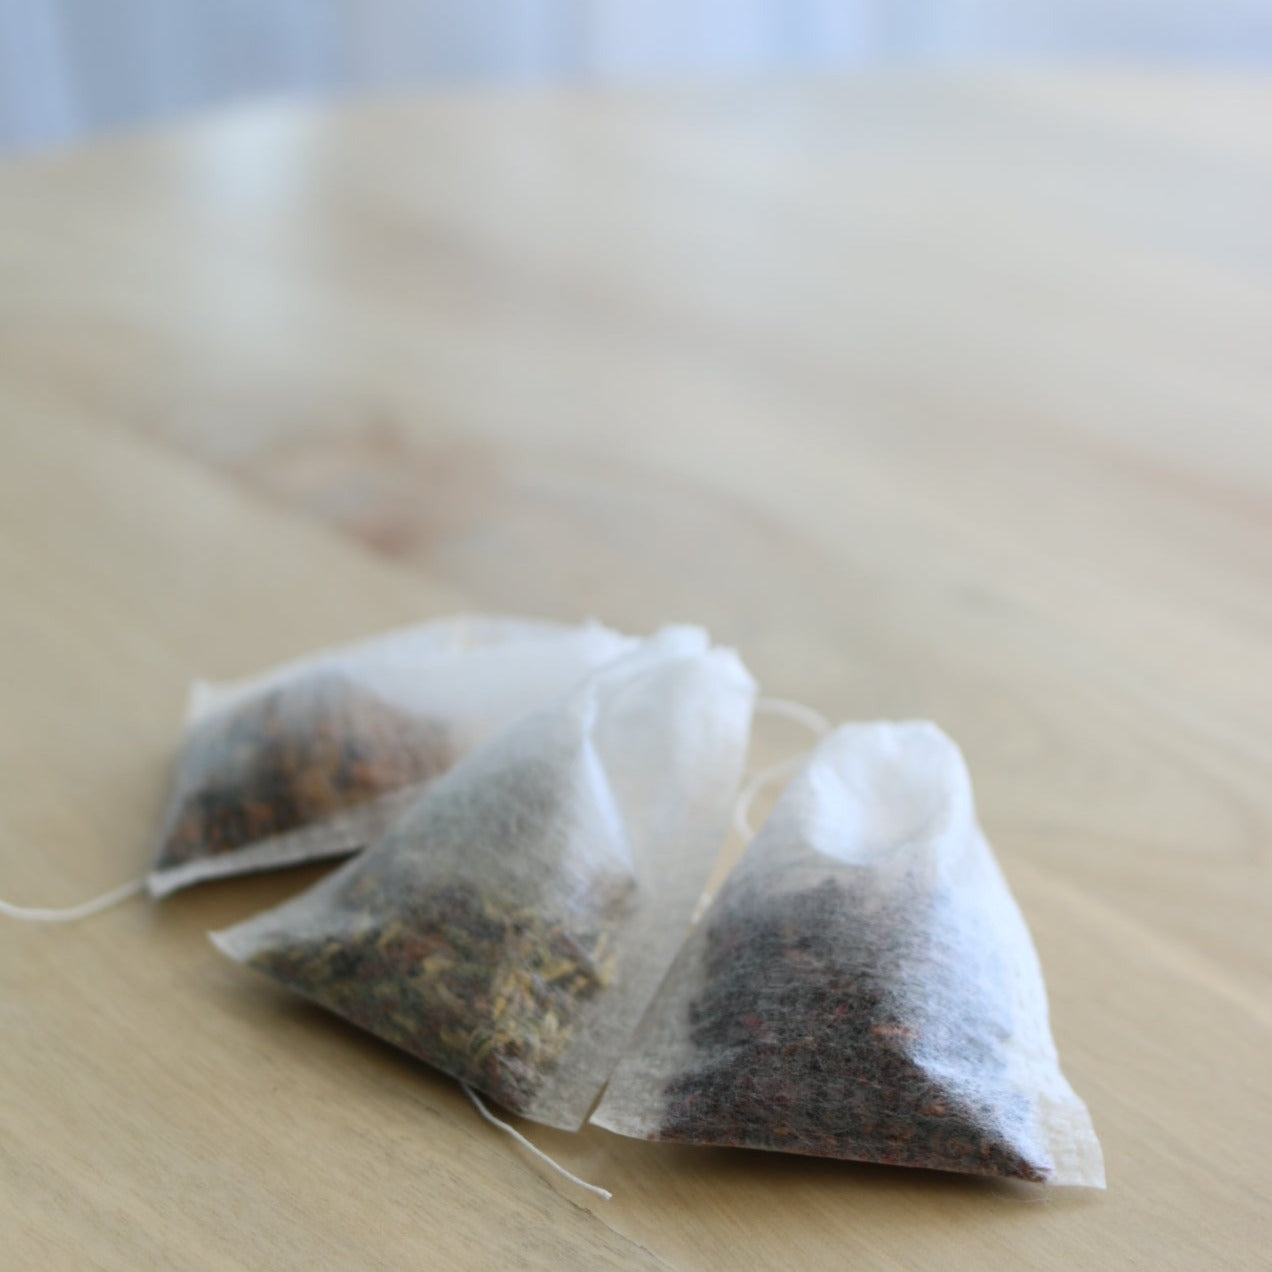 BIO DEGRADABLE TEA BAGS - Fallen Leaf Teas